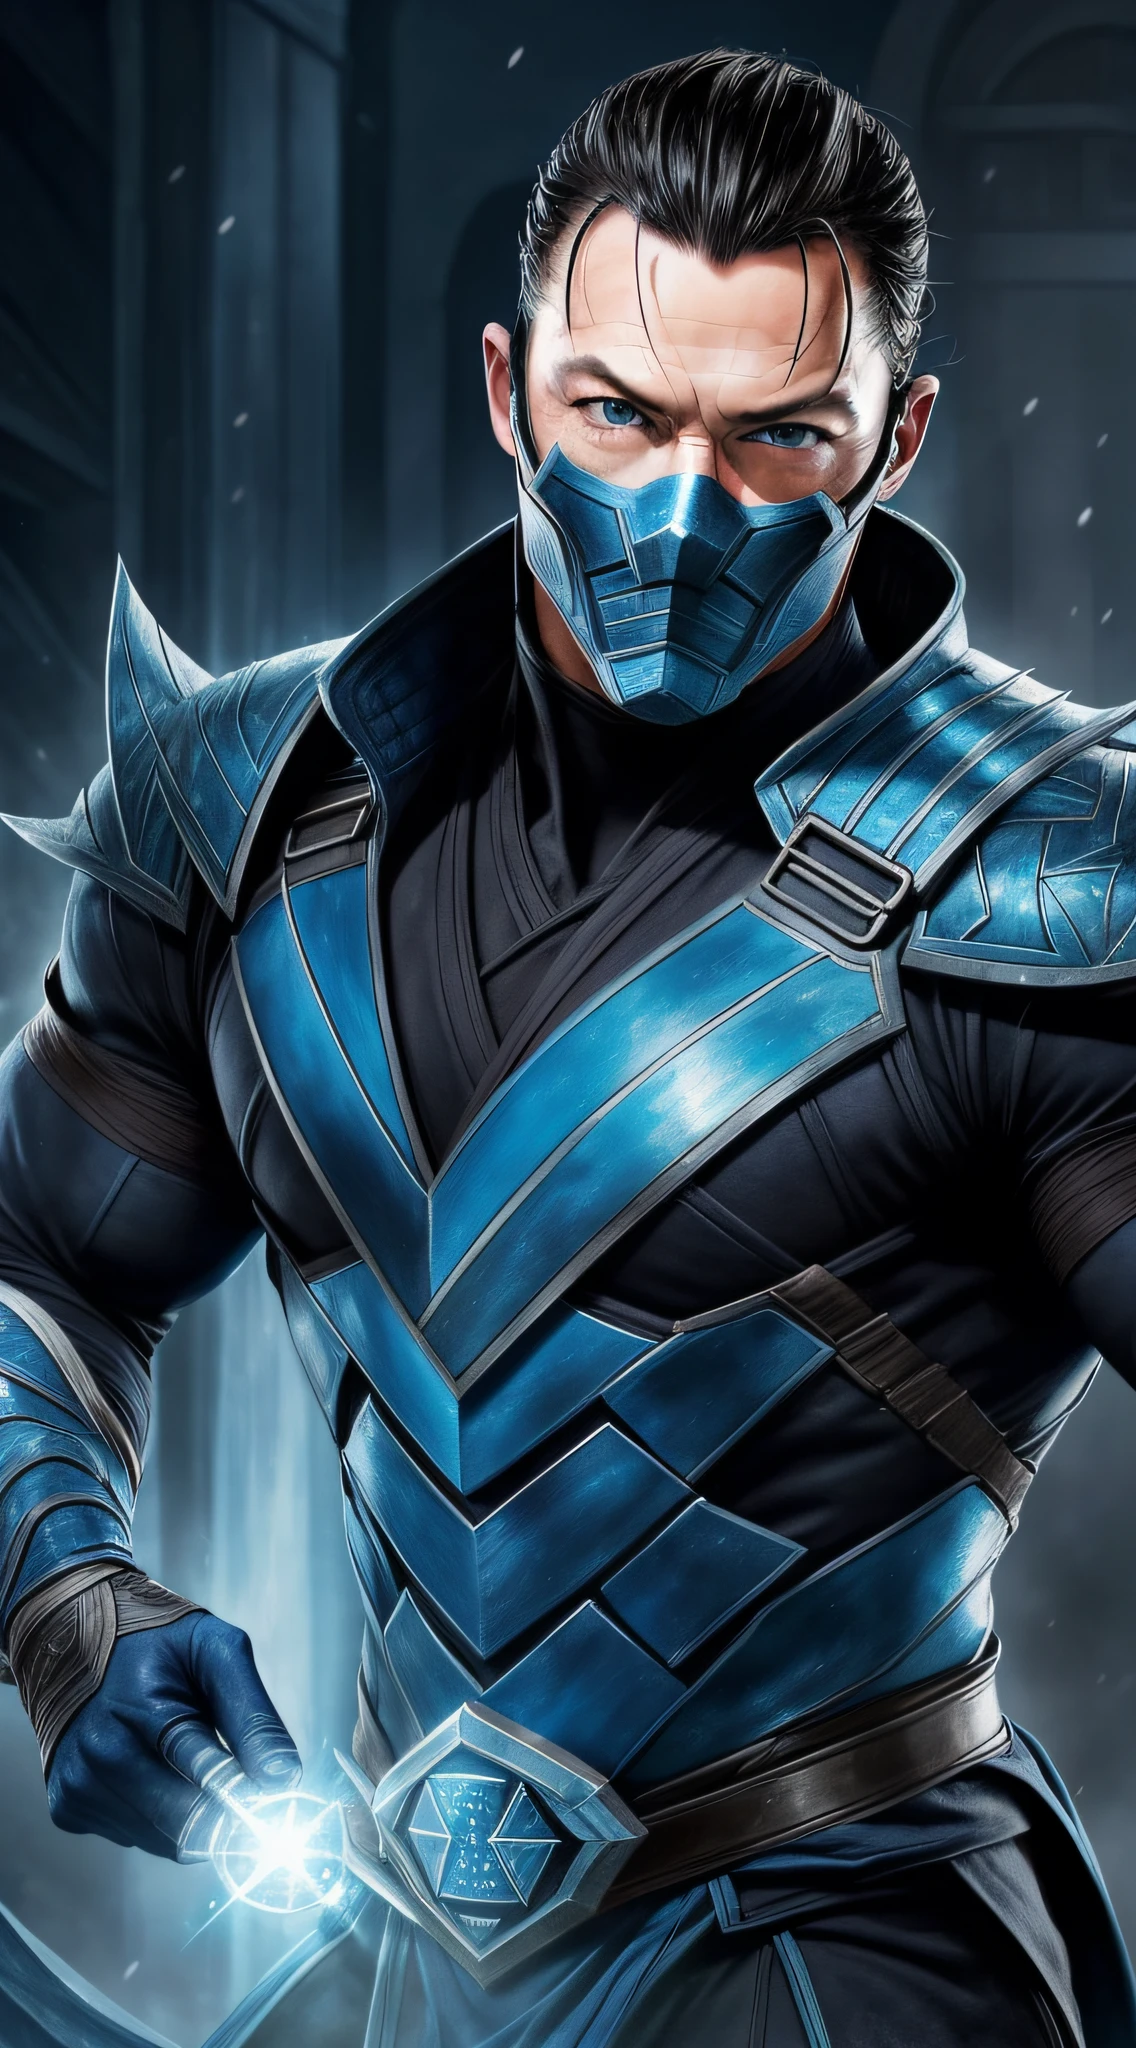 a photo of ((Luke Evans)) as Sub-Zero from Mortal Kombat, short hair, blue and black ninja outfit, ninja mask, (ice), cold, Intricate, High Detail, Sharp focus, dramatic, photorealistic painting art by greg rutkowski